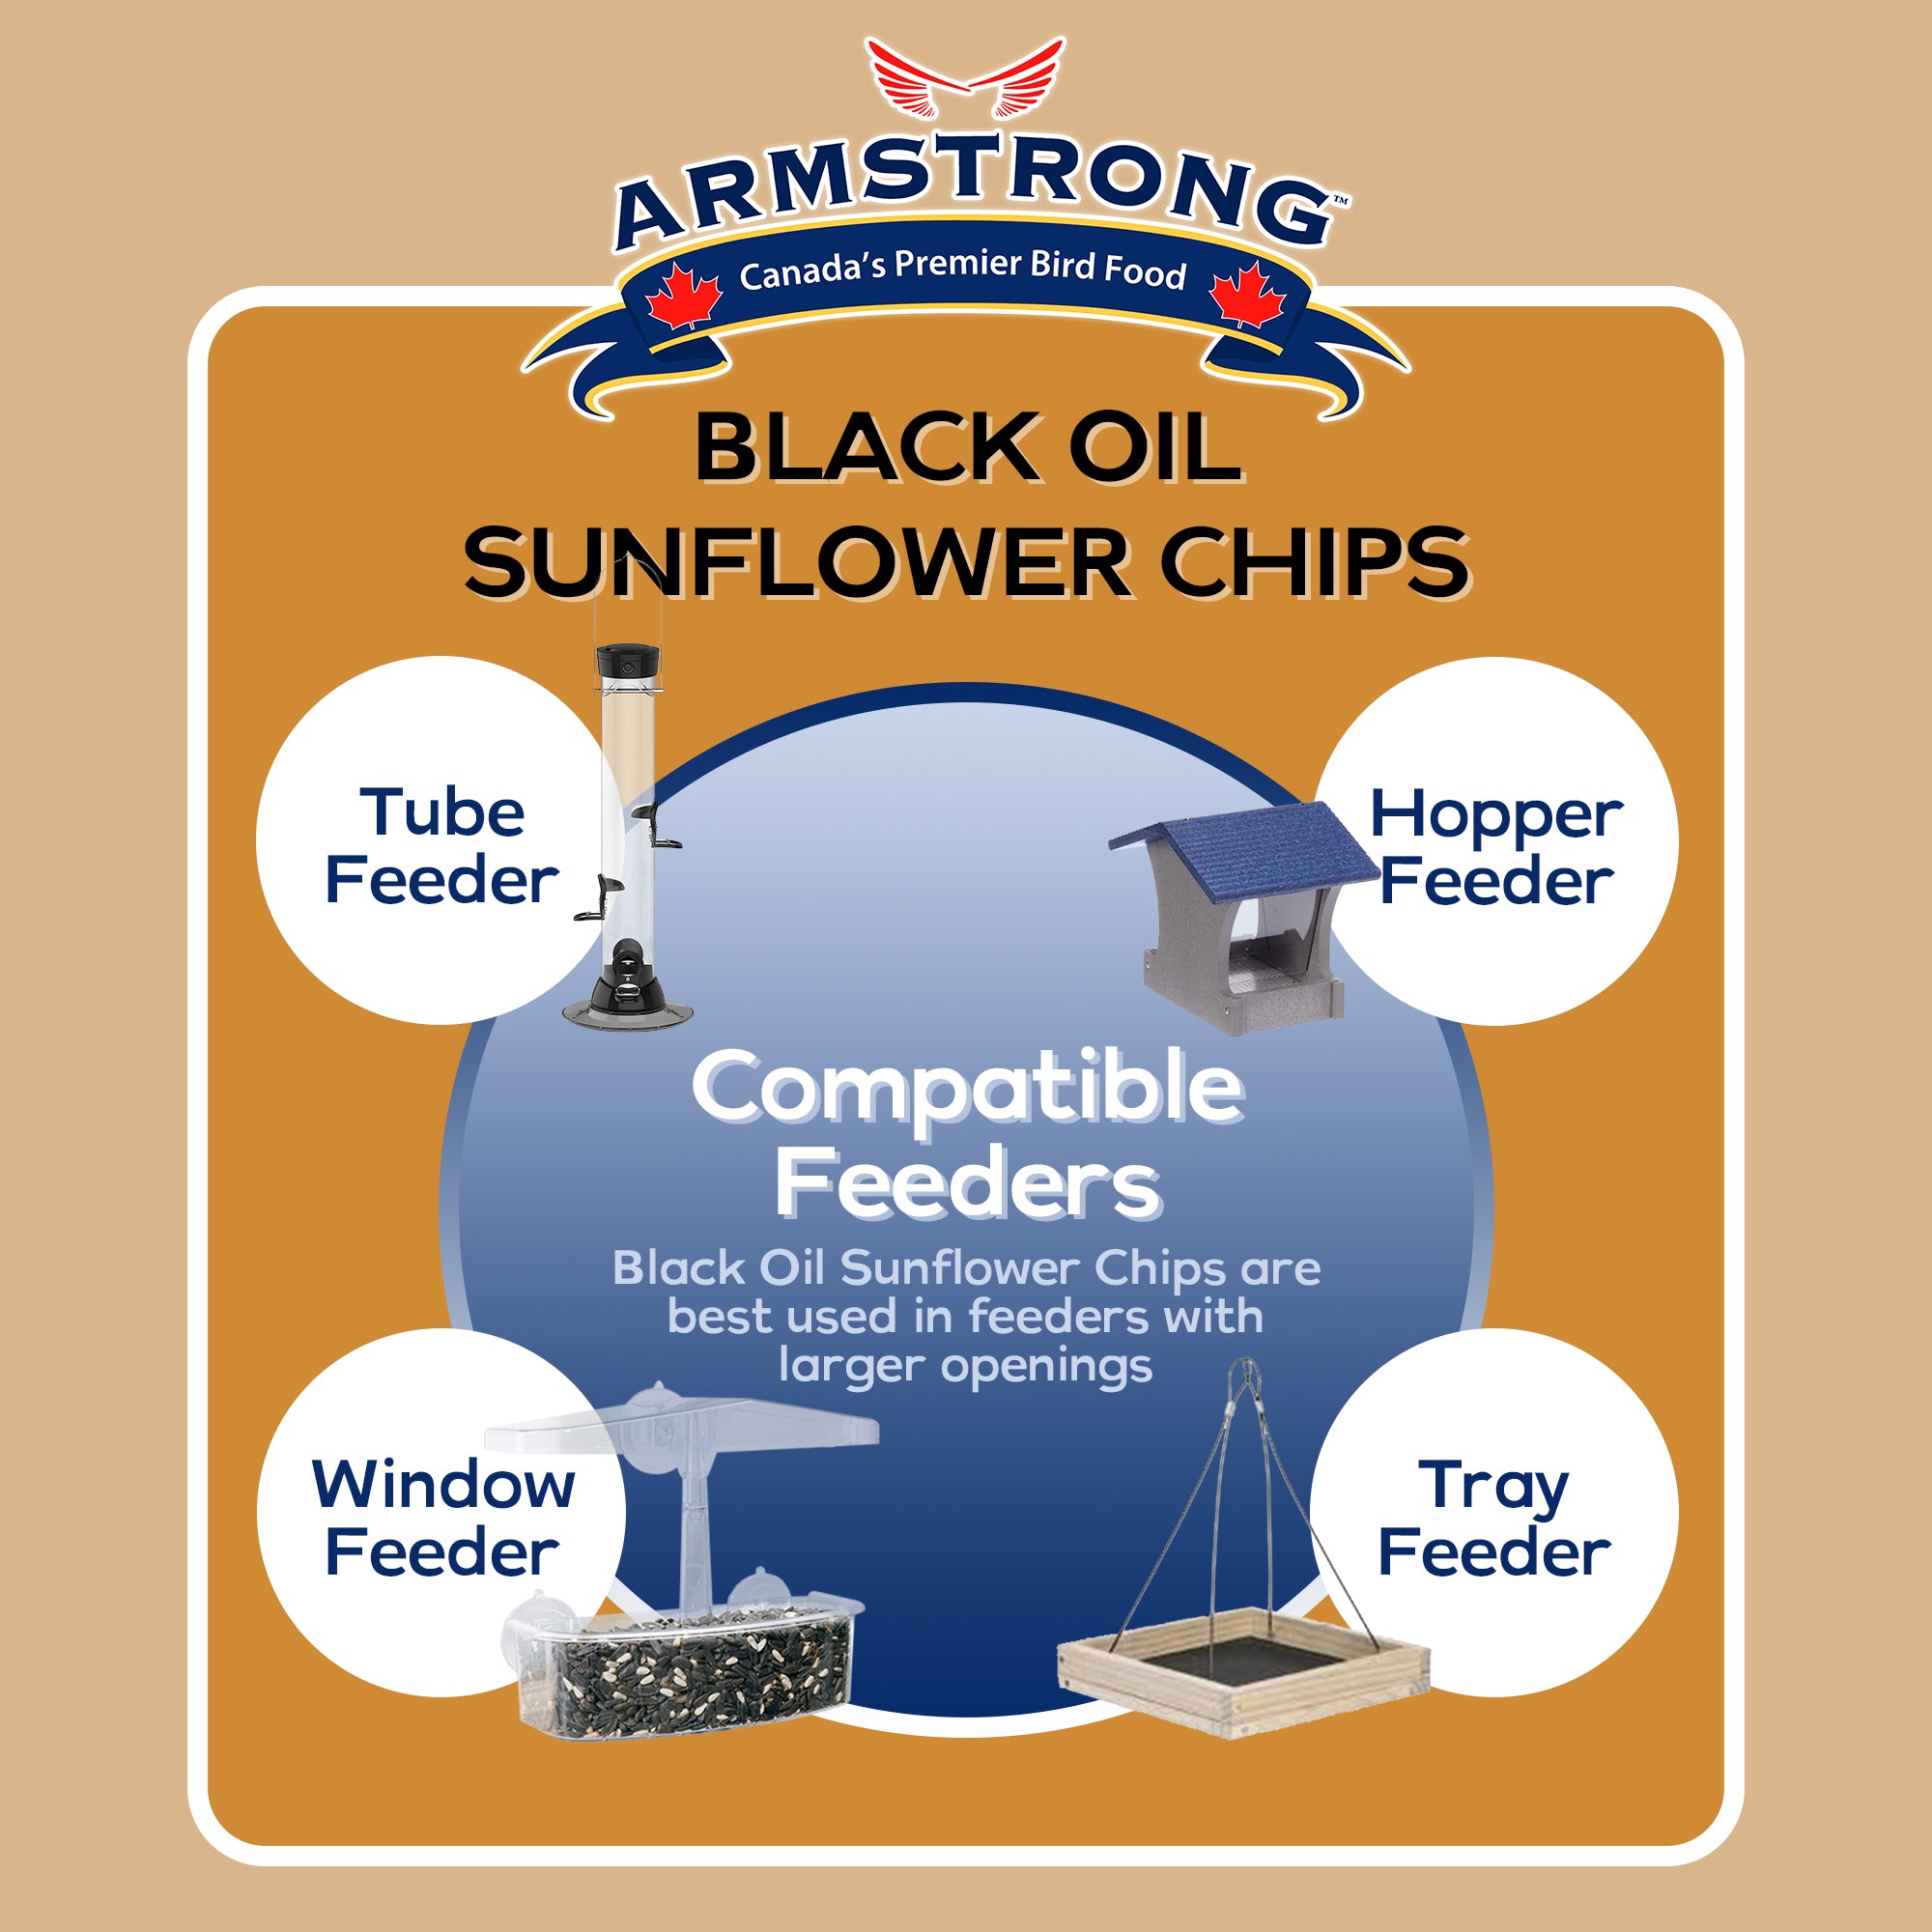 Armstrong Wild Bird Food Black Oil Sunflower Chips